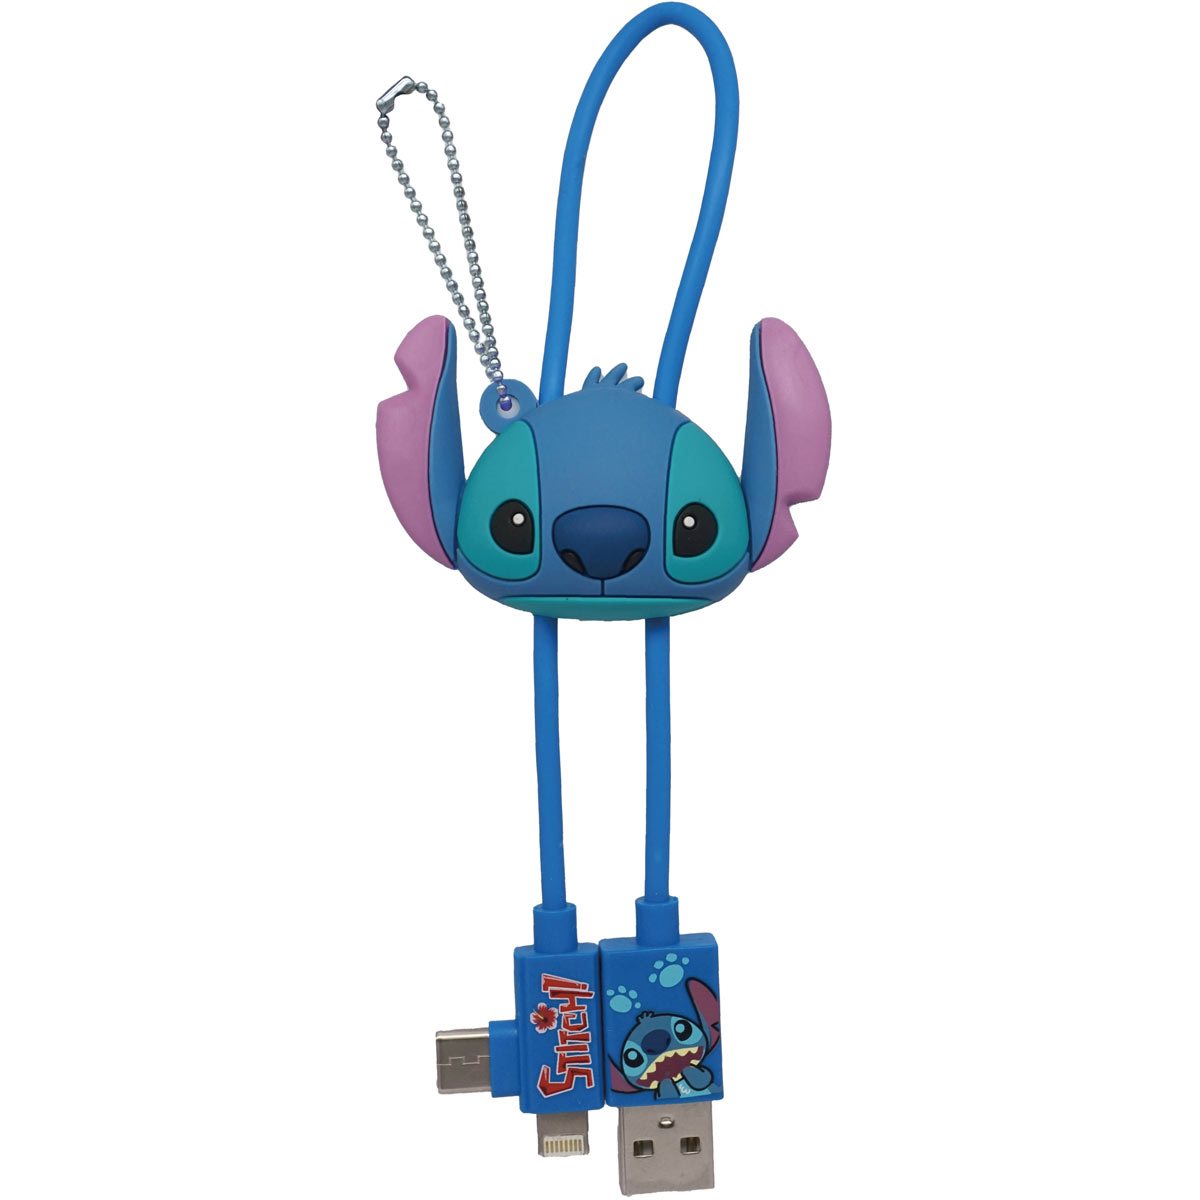 Disney's Stitch from Lilo & Stitch - Buy Royalty Free 3D model by